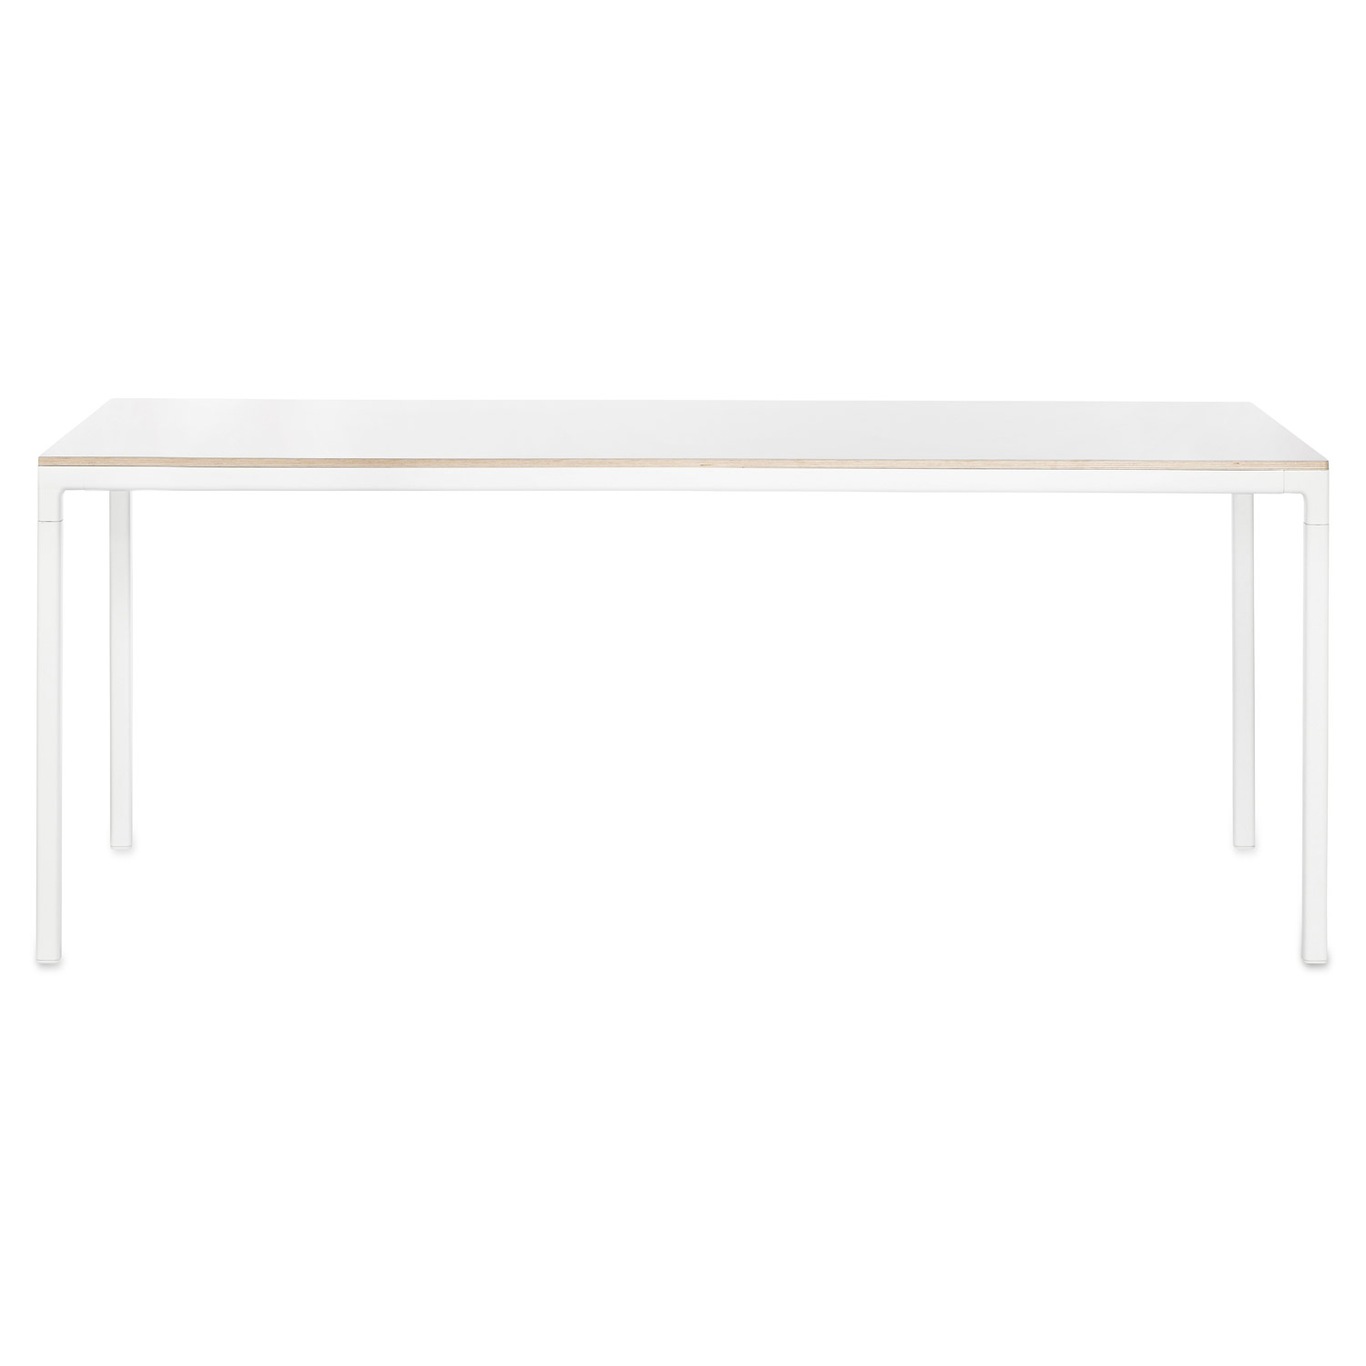 T12 Table 95x200 cm, White